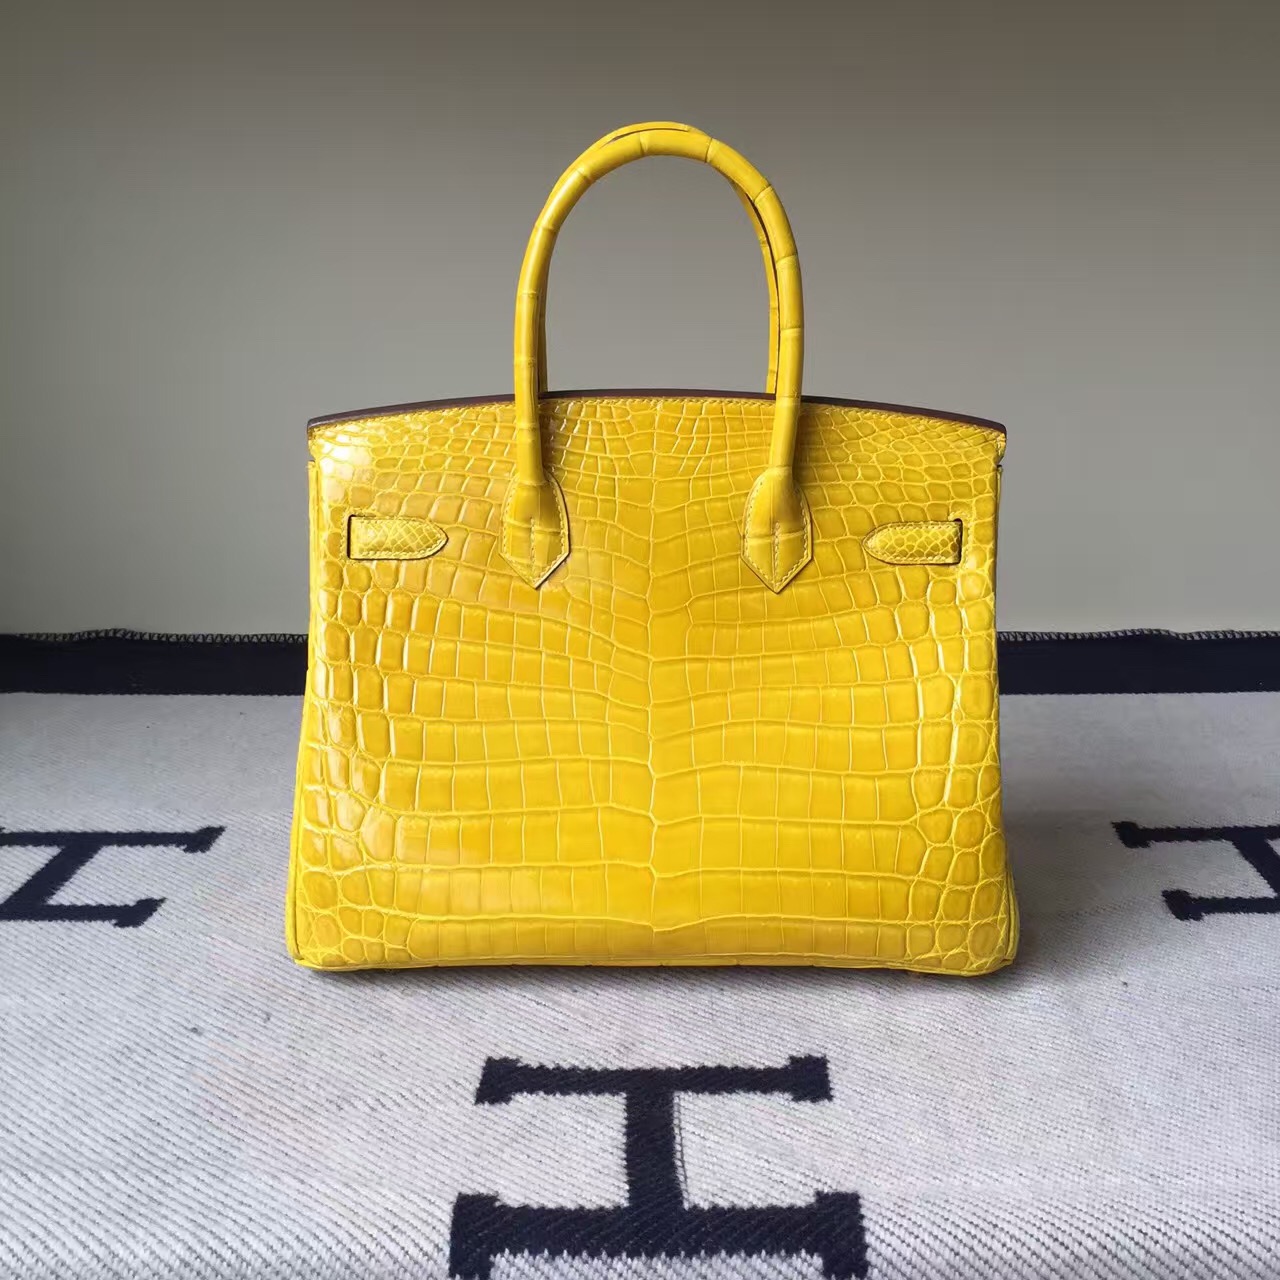 New Pretty Hermes Crocodile Shiny Leather Birkin30cm in Lemon Yellow